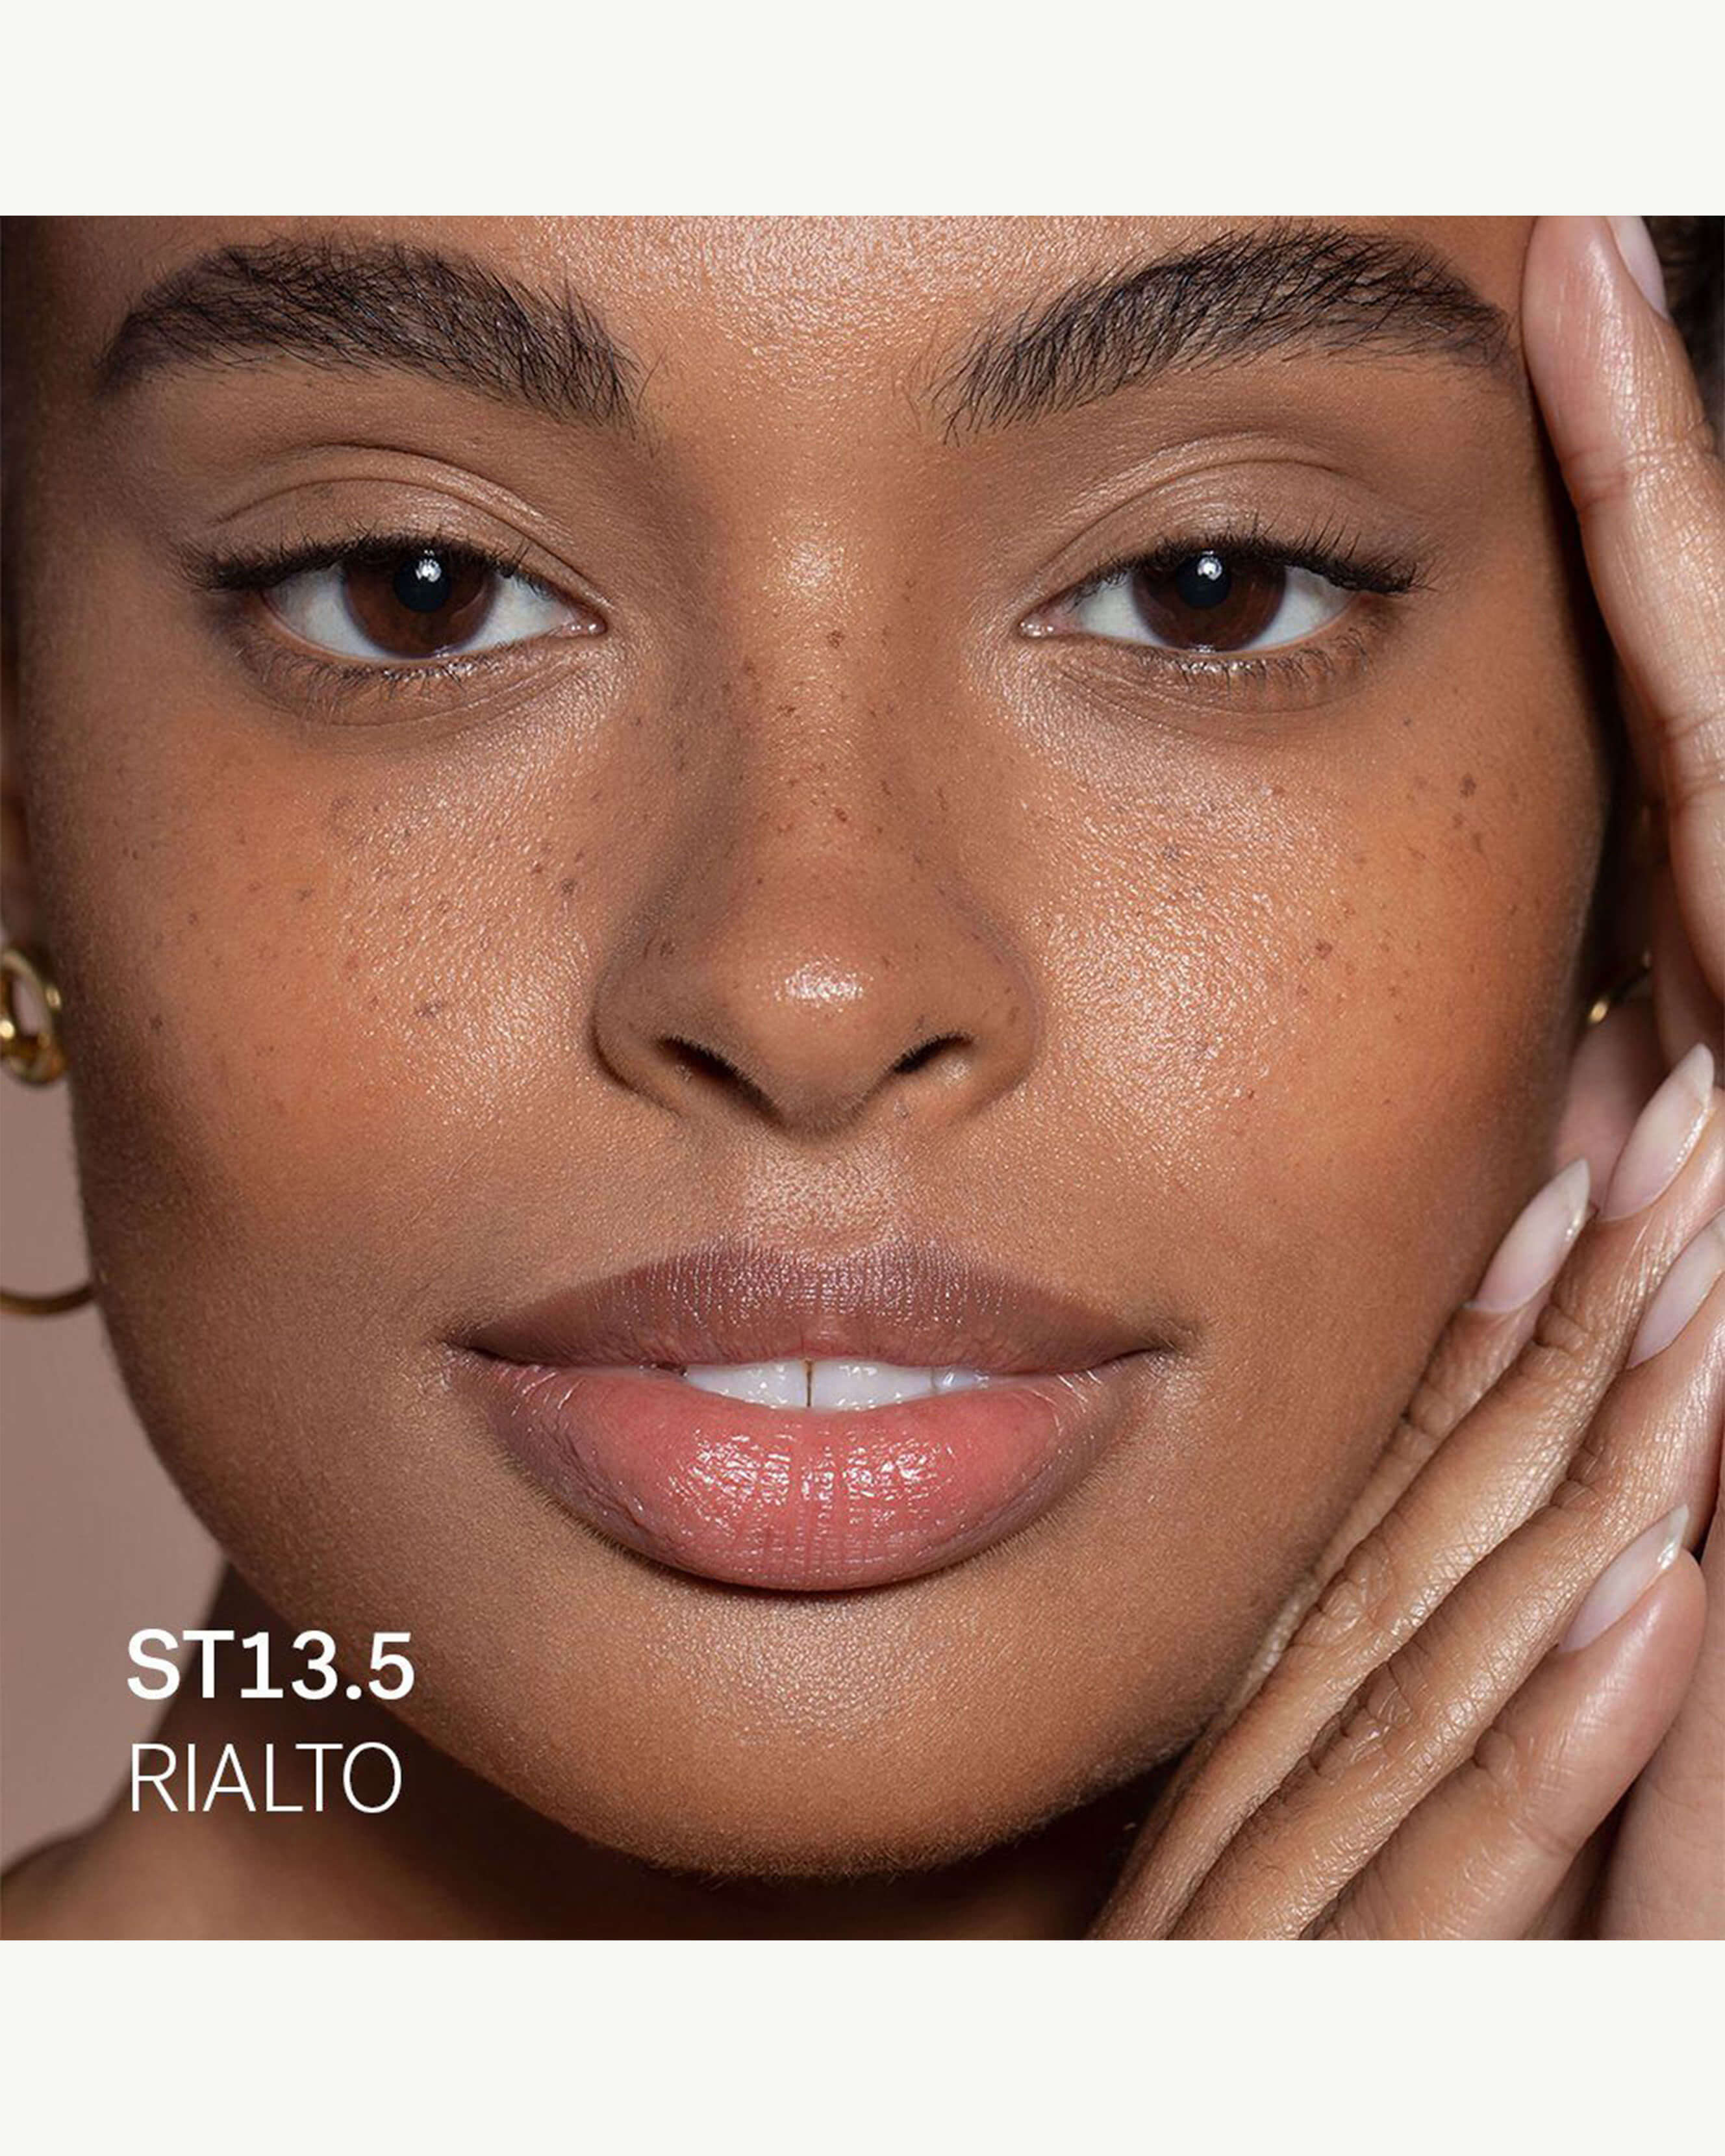 ST13.5 Rialto (for tan-dark skin with golden undertones)